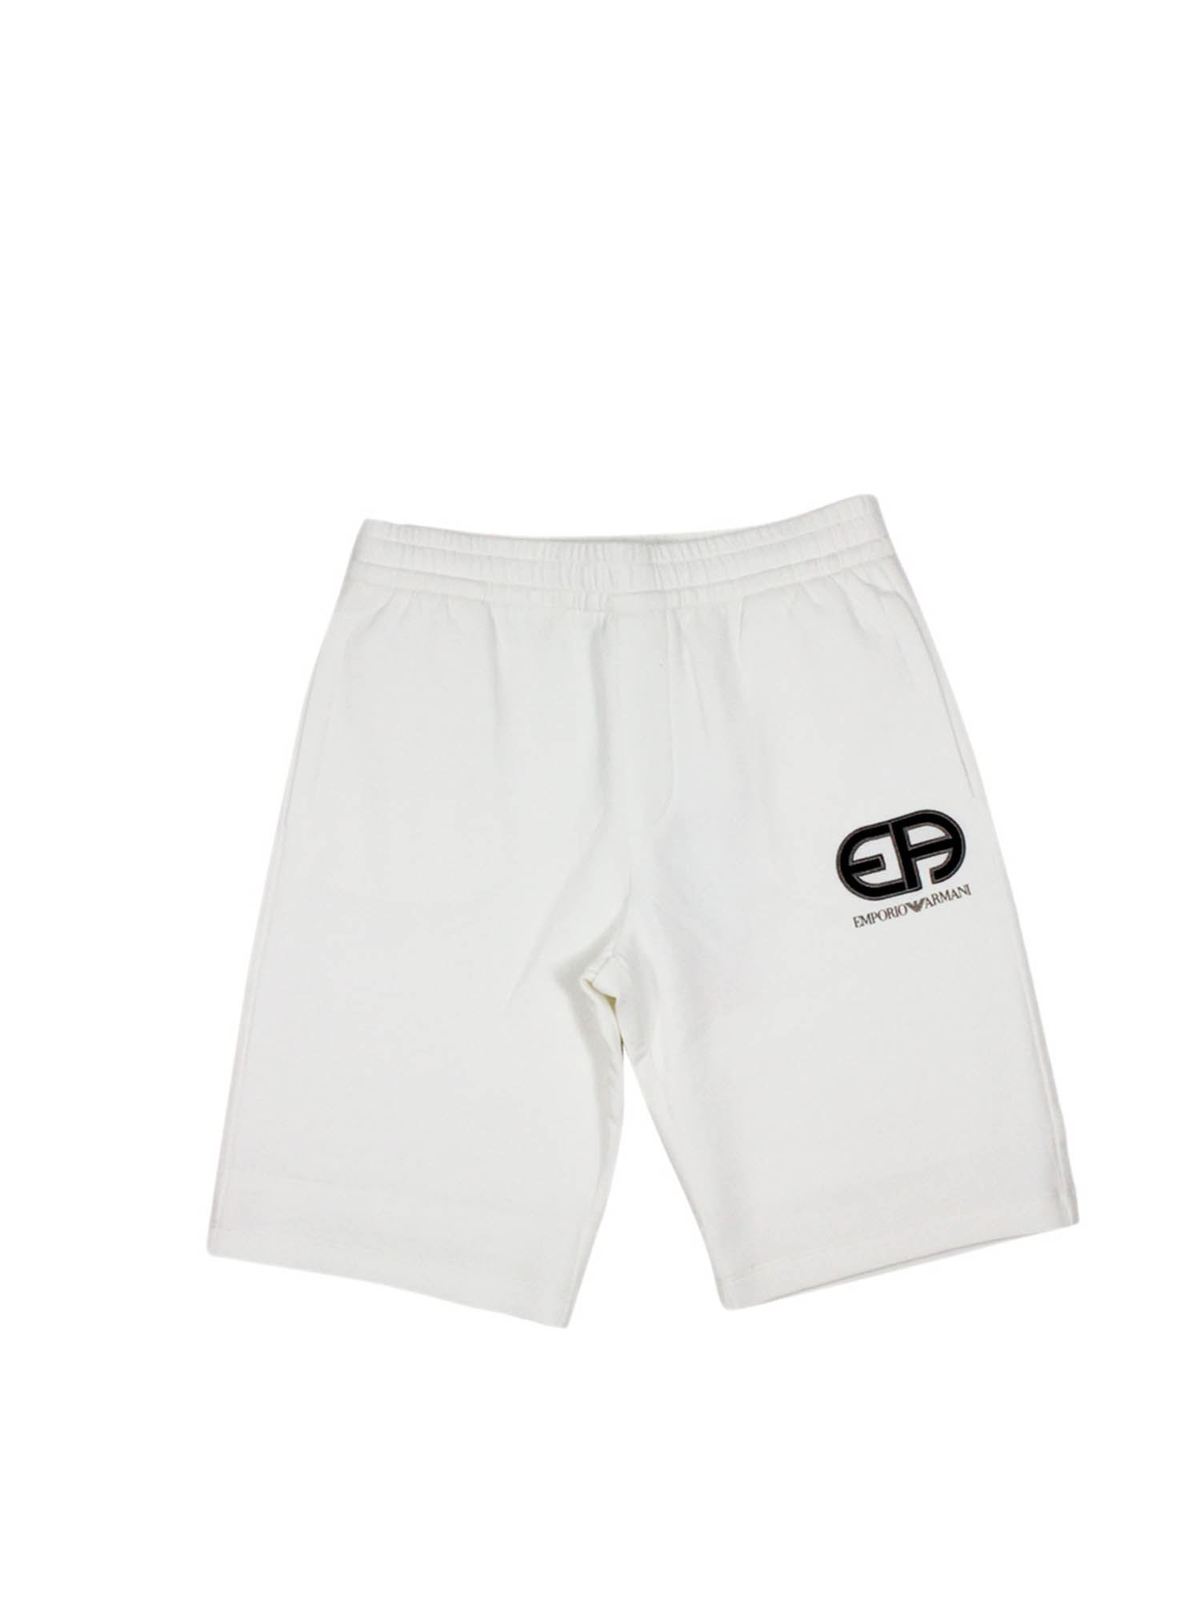 Pantalones Cortos Armani - Shorts - - 3K4P921JHSZ0101